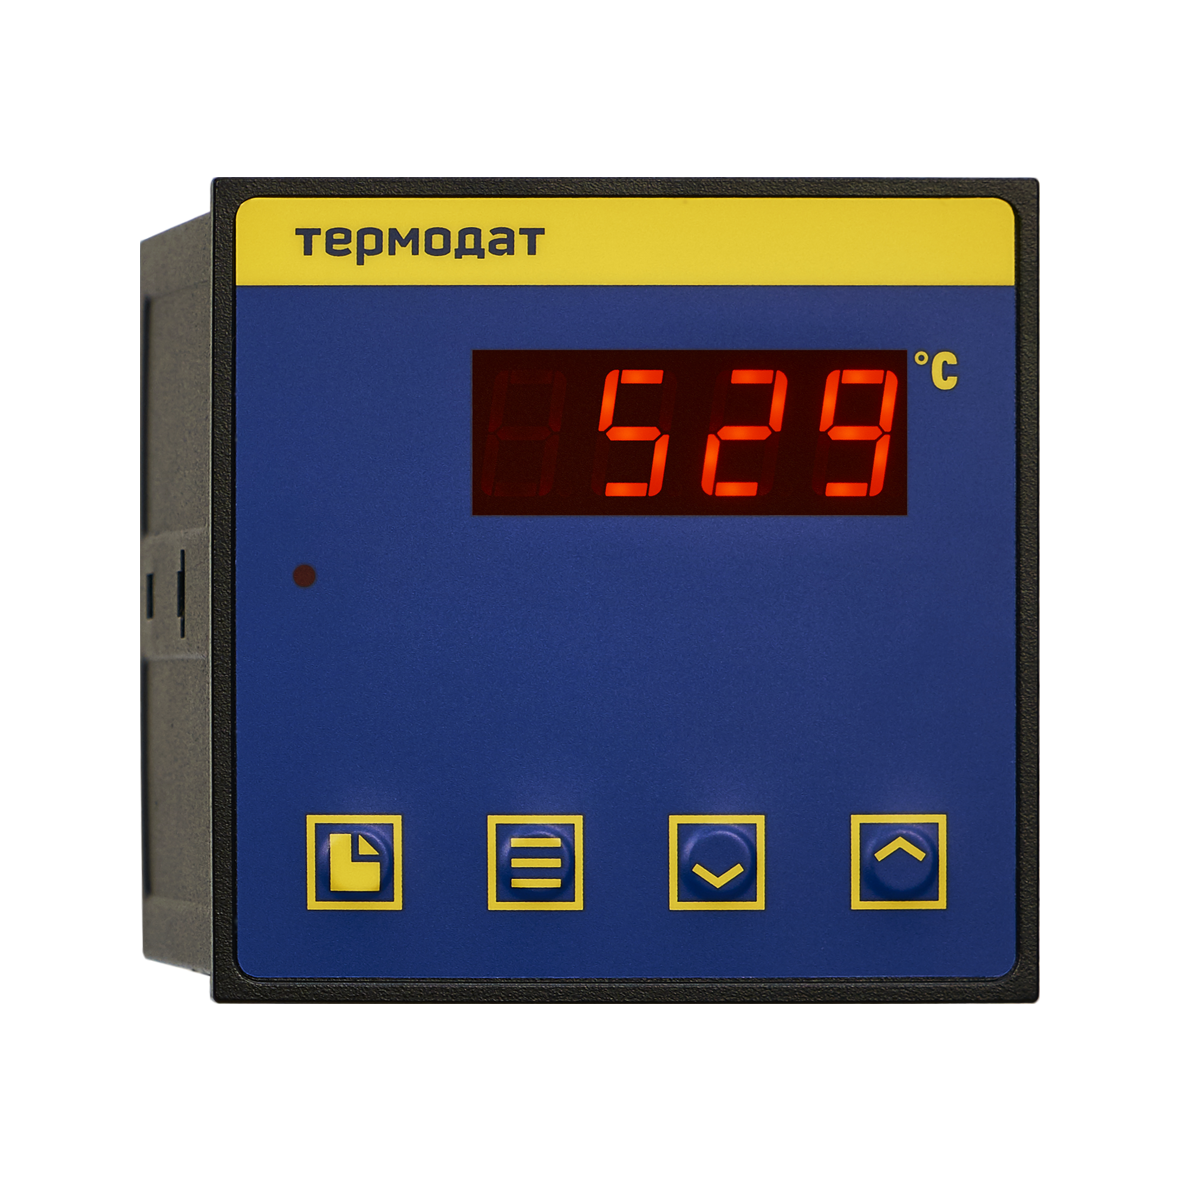 Термодат-10М7 Измерители-регуляторы температуры